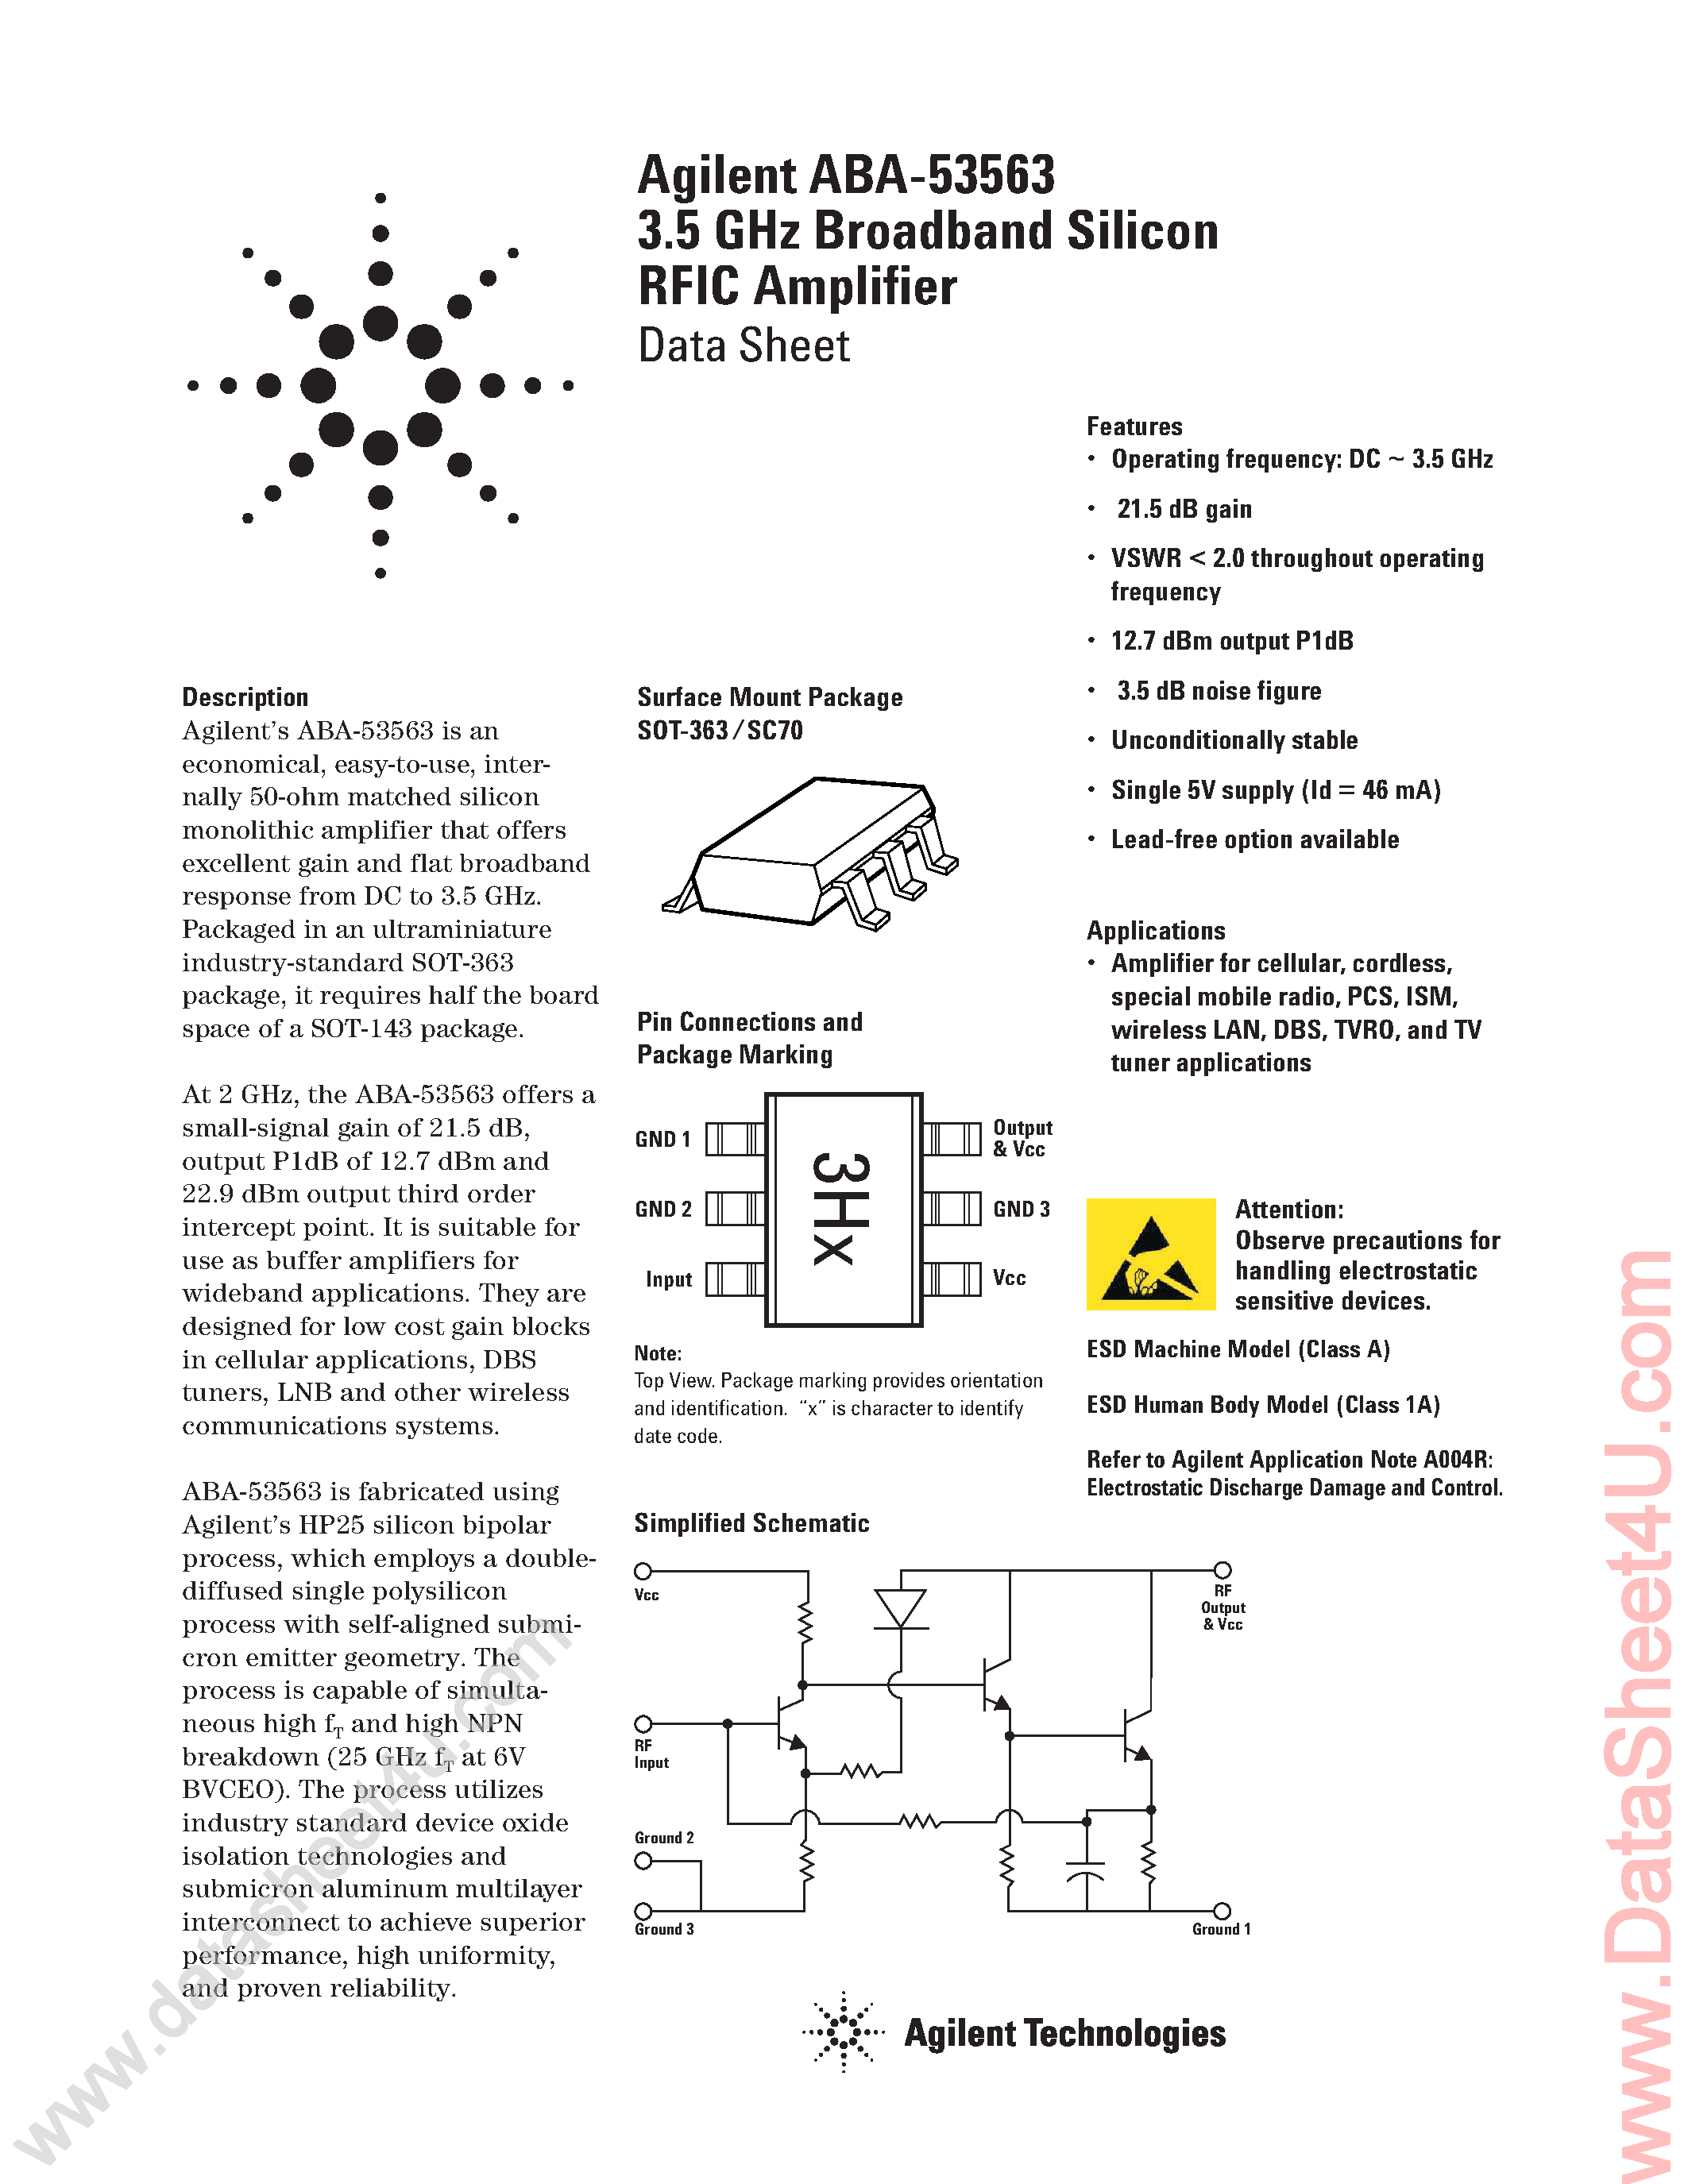 Даташит ABA-53563 - 3.5 Ghz Broadband Silicon RFIC Amplifier страница 1